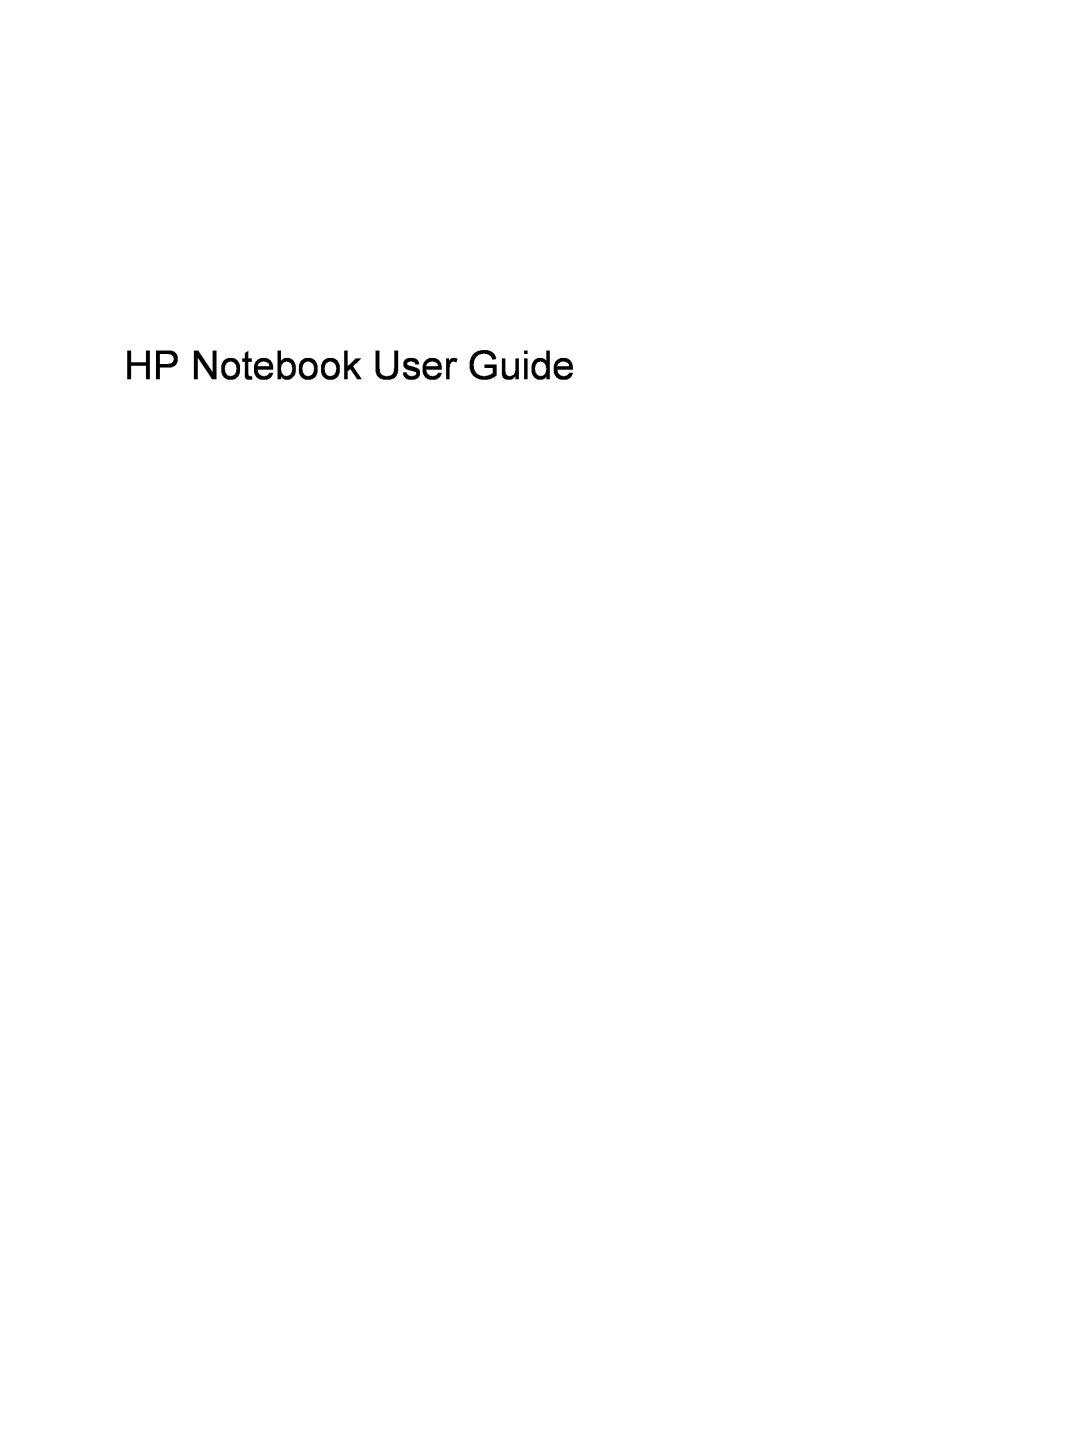 HP CQ56-100XX, CQ56-110US, CQ56-104CA, CQ56-112NR, CQ56-115DX, CQ56-122NR, CQ56-154CA, CQ56-124CA manual HP Notebook User Guide 